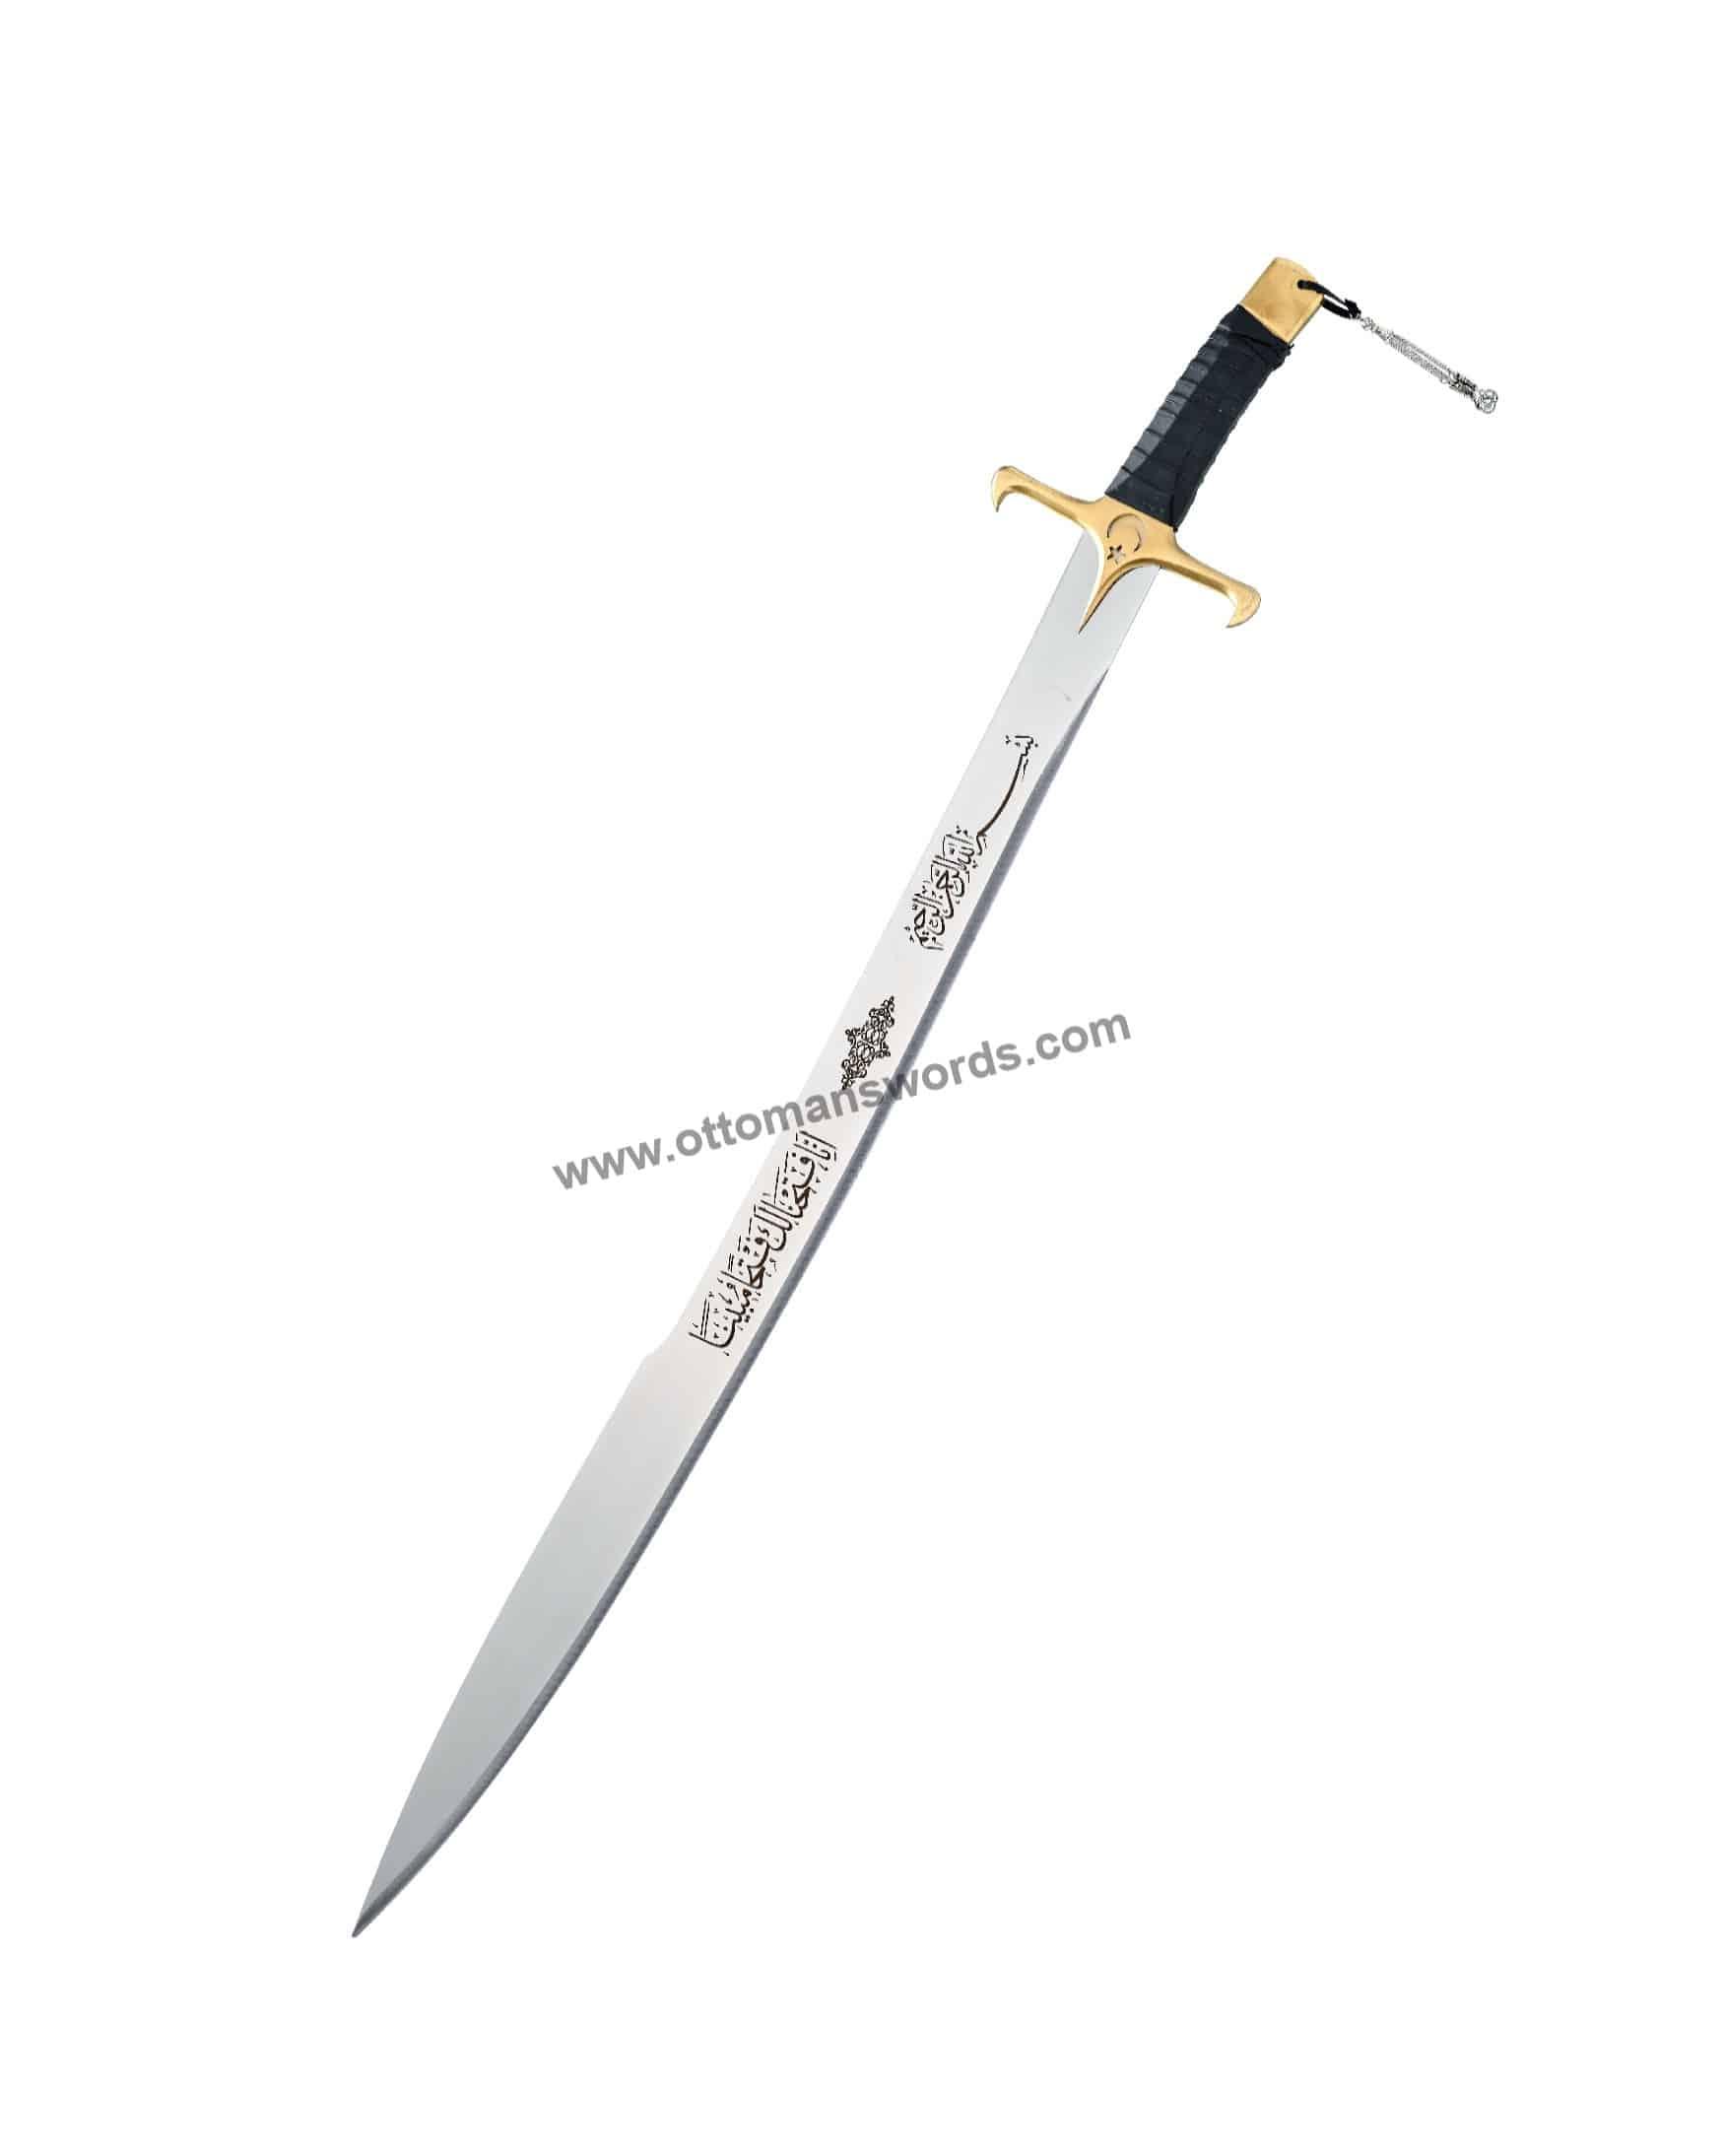 Resurrection Sword (1)